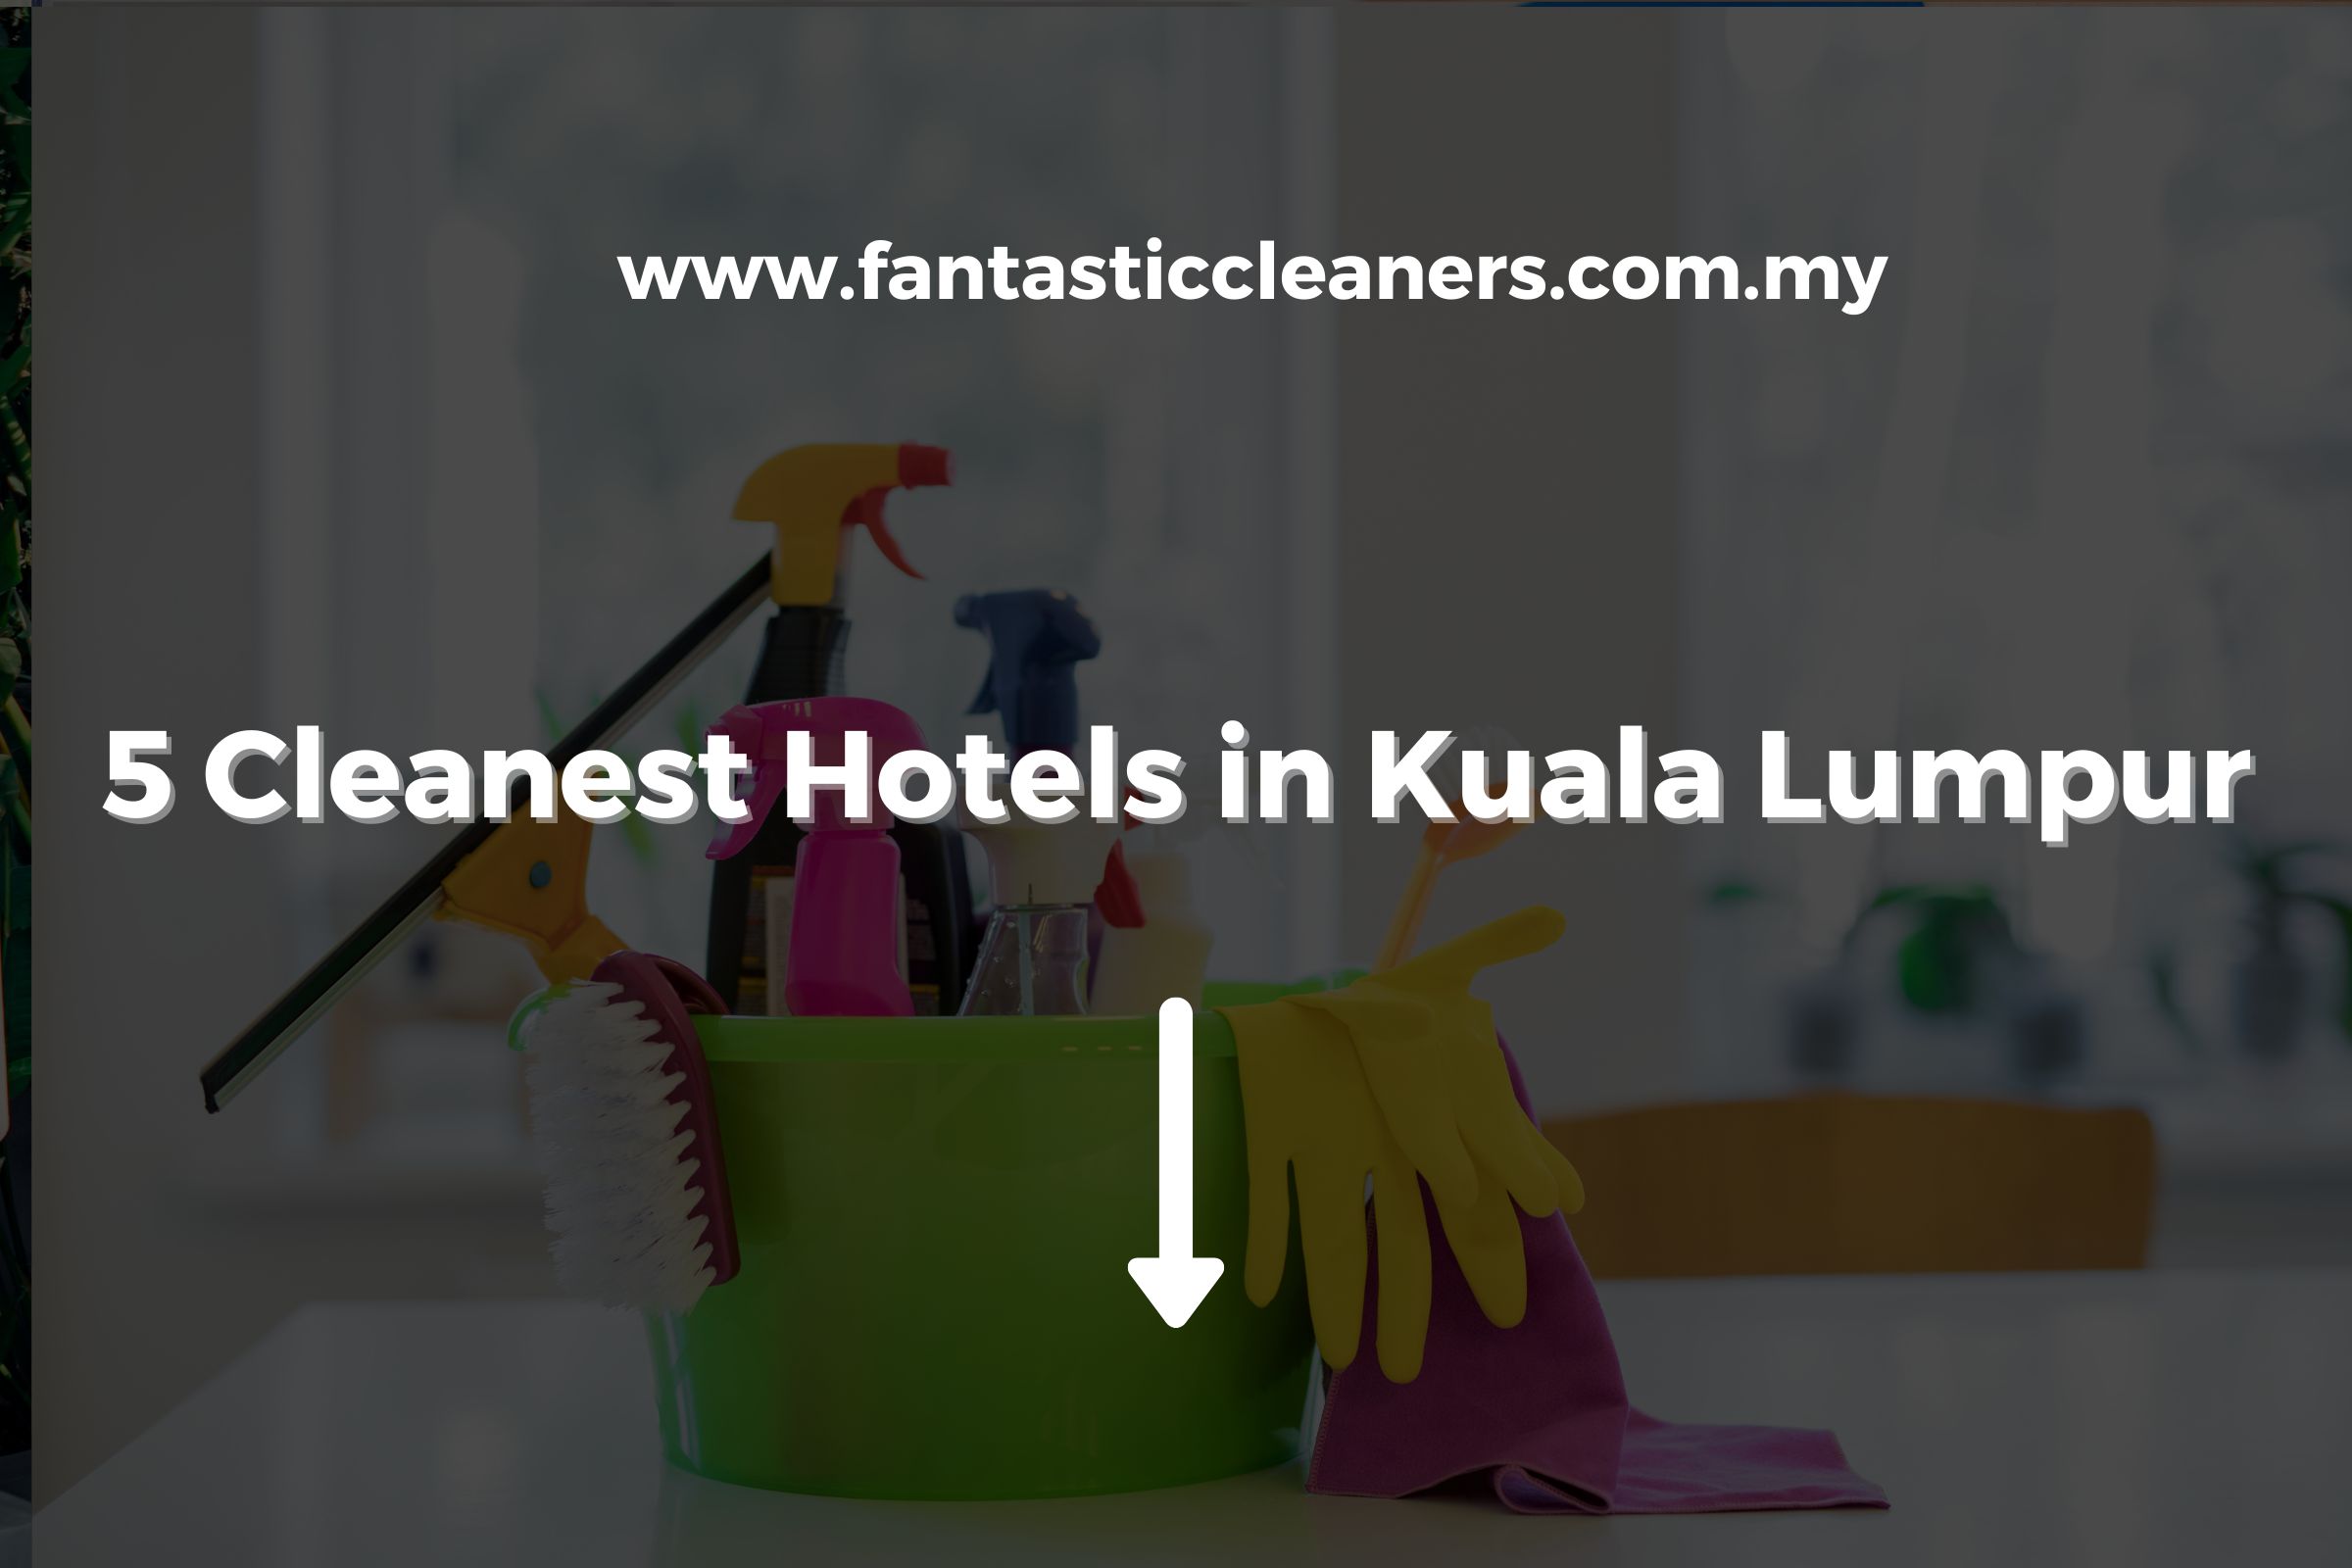 5 Cleanest Hotels in Kuala Lumpur